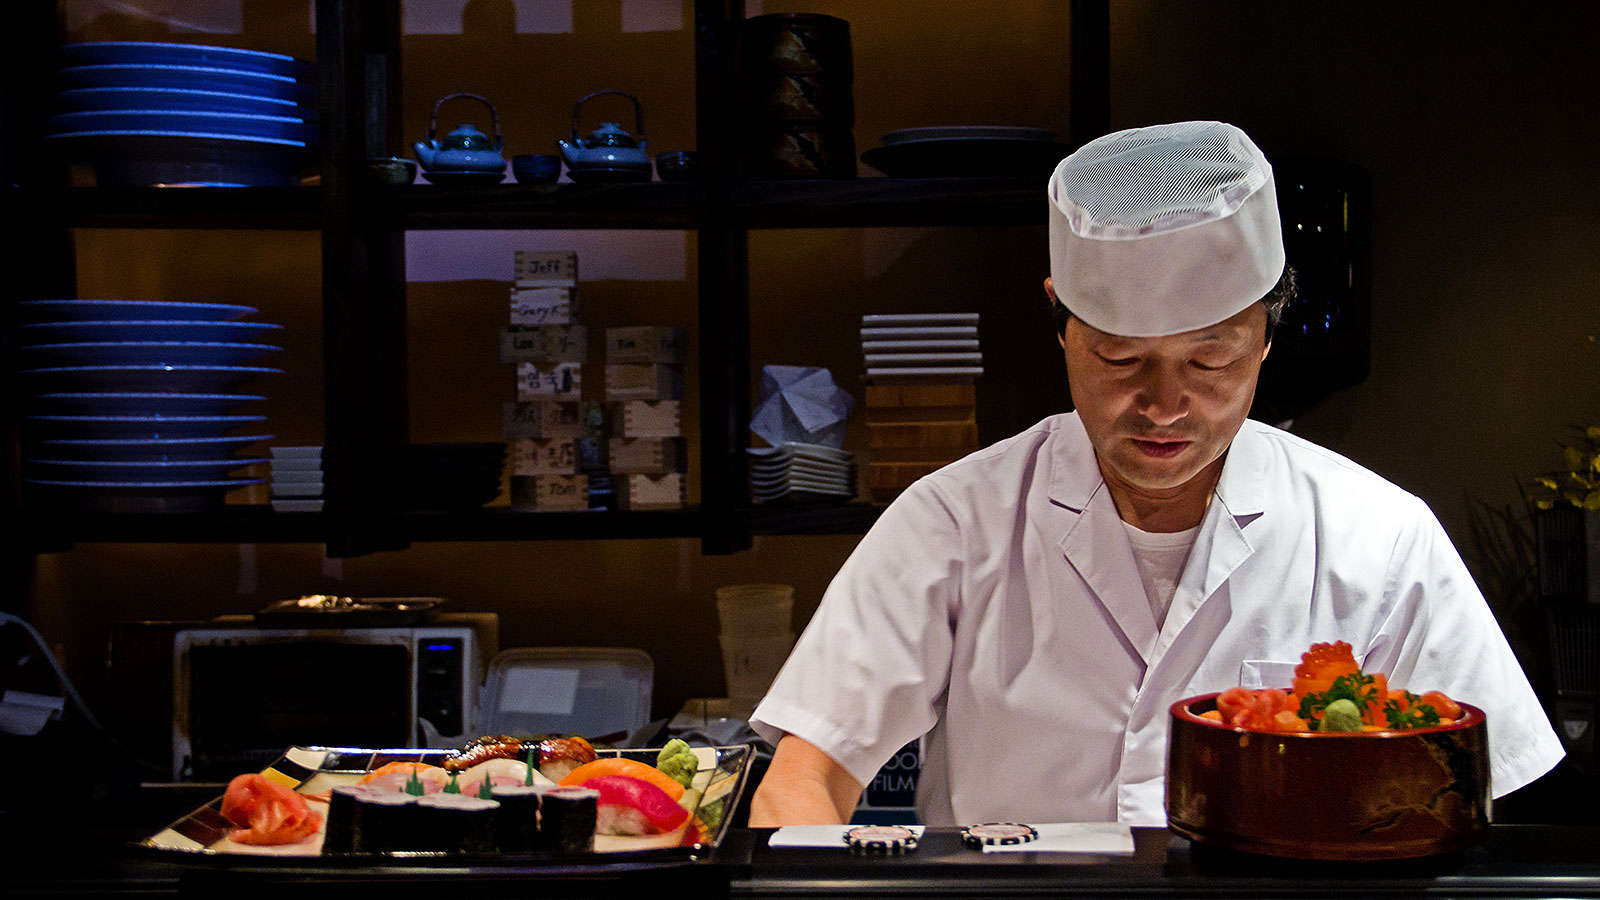 sushi chef knife handling practices sharpening